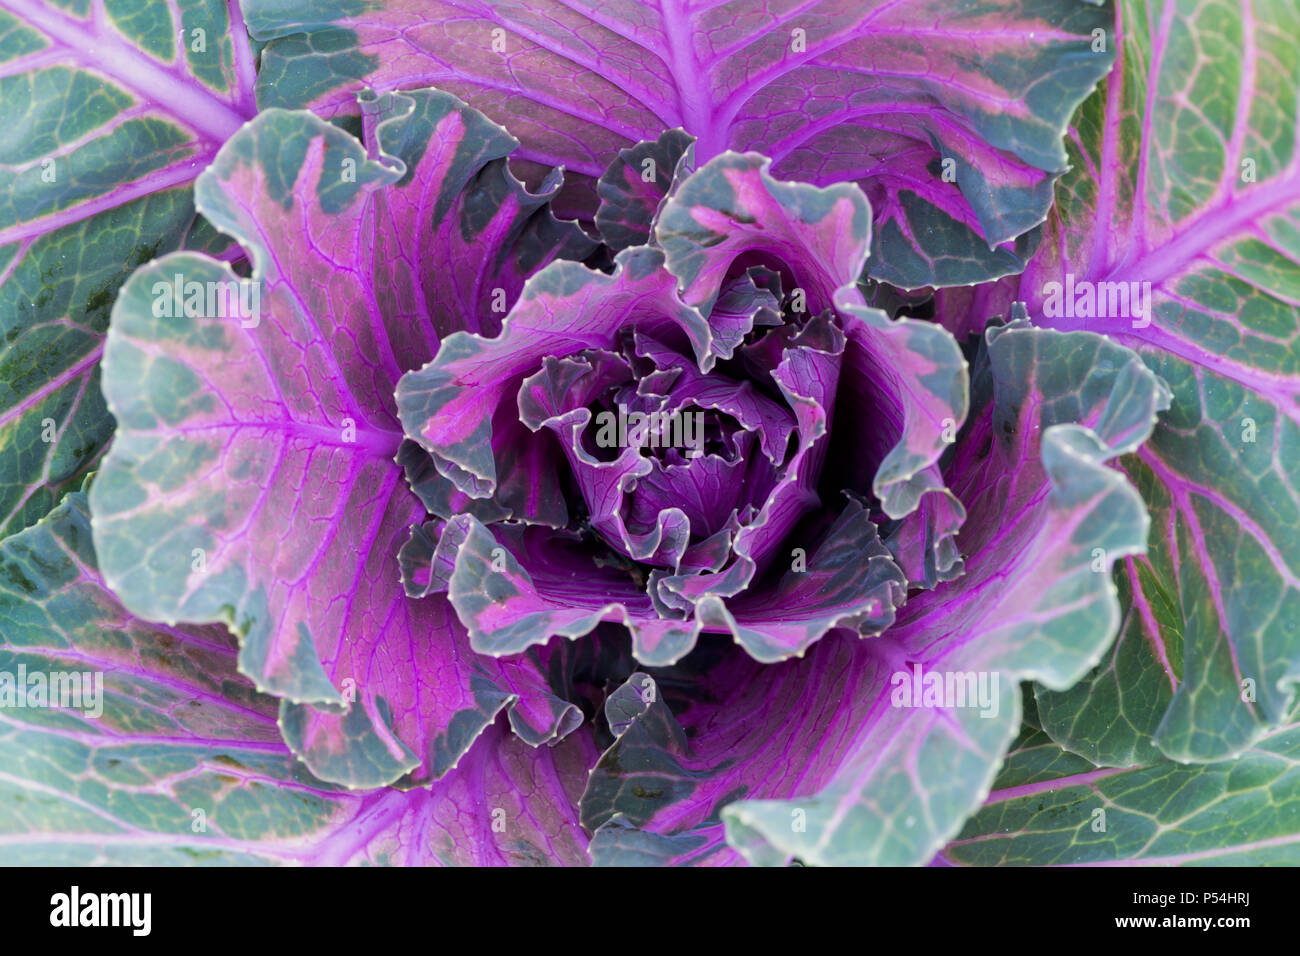 Brassica oleracea. Cabbage Northern Lights F1 Hybrid. Ornamental cabbage pattern Stock Photo